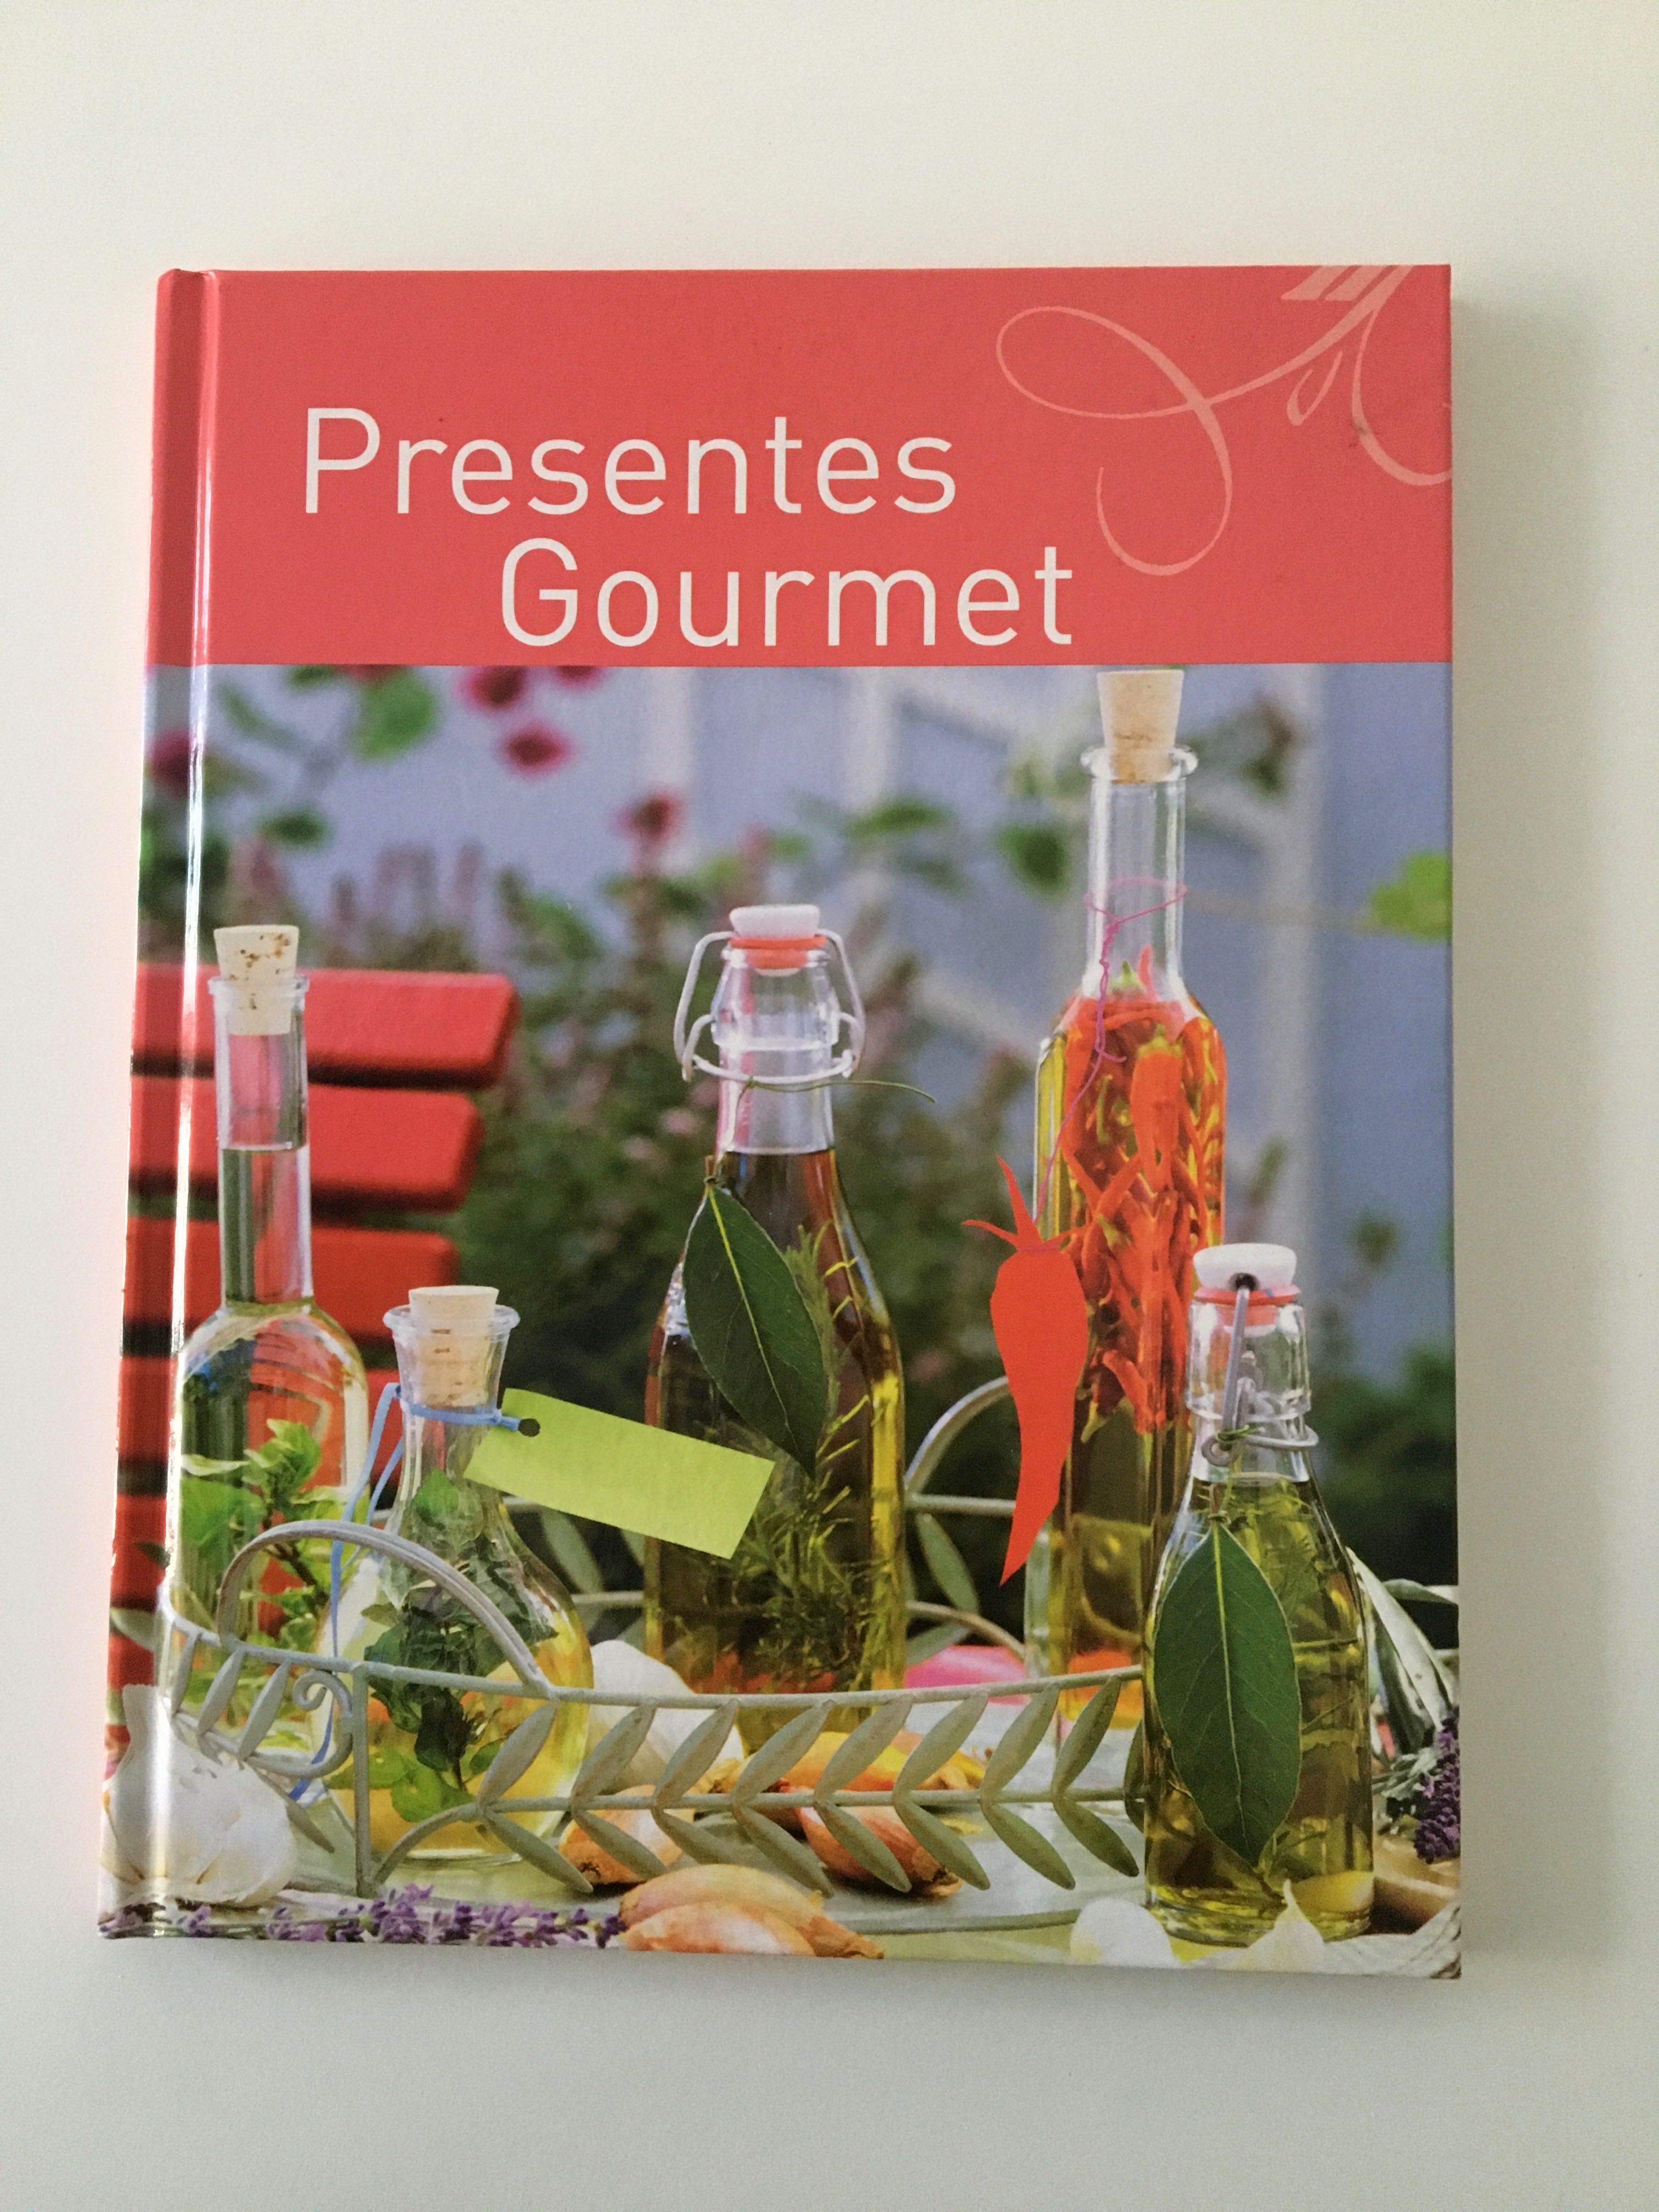 Presentes Gourmet